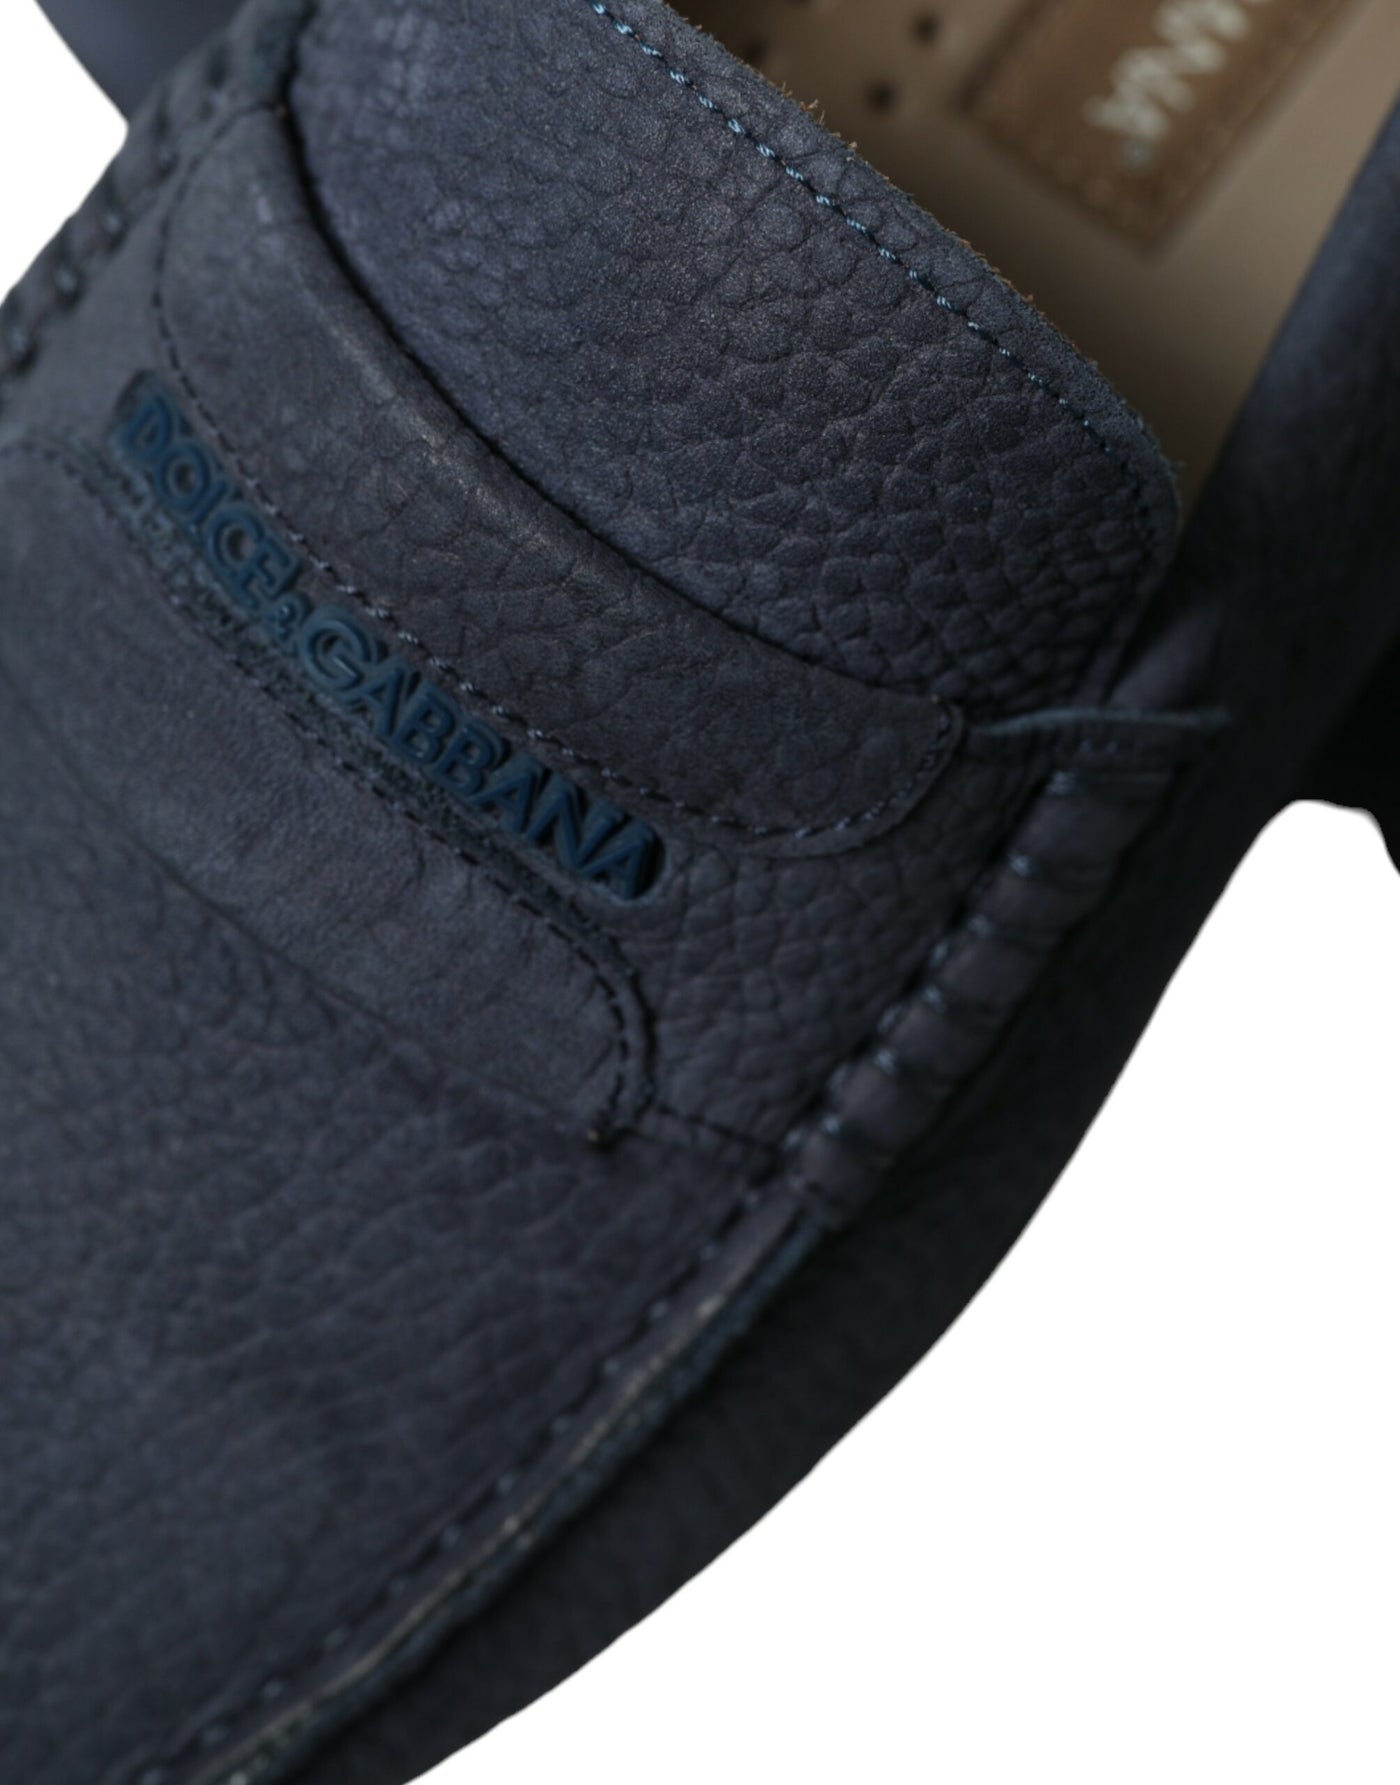 Dolce & Gabbana Blue Calfskin Leather Slip On Moccasin Shoes